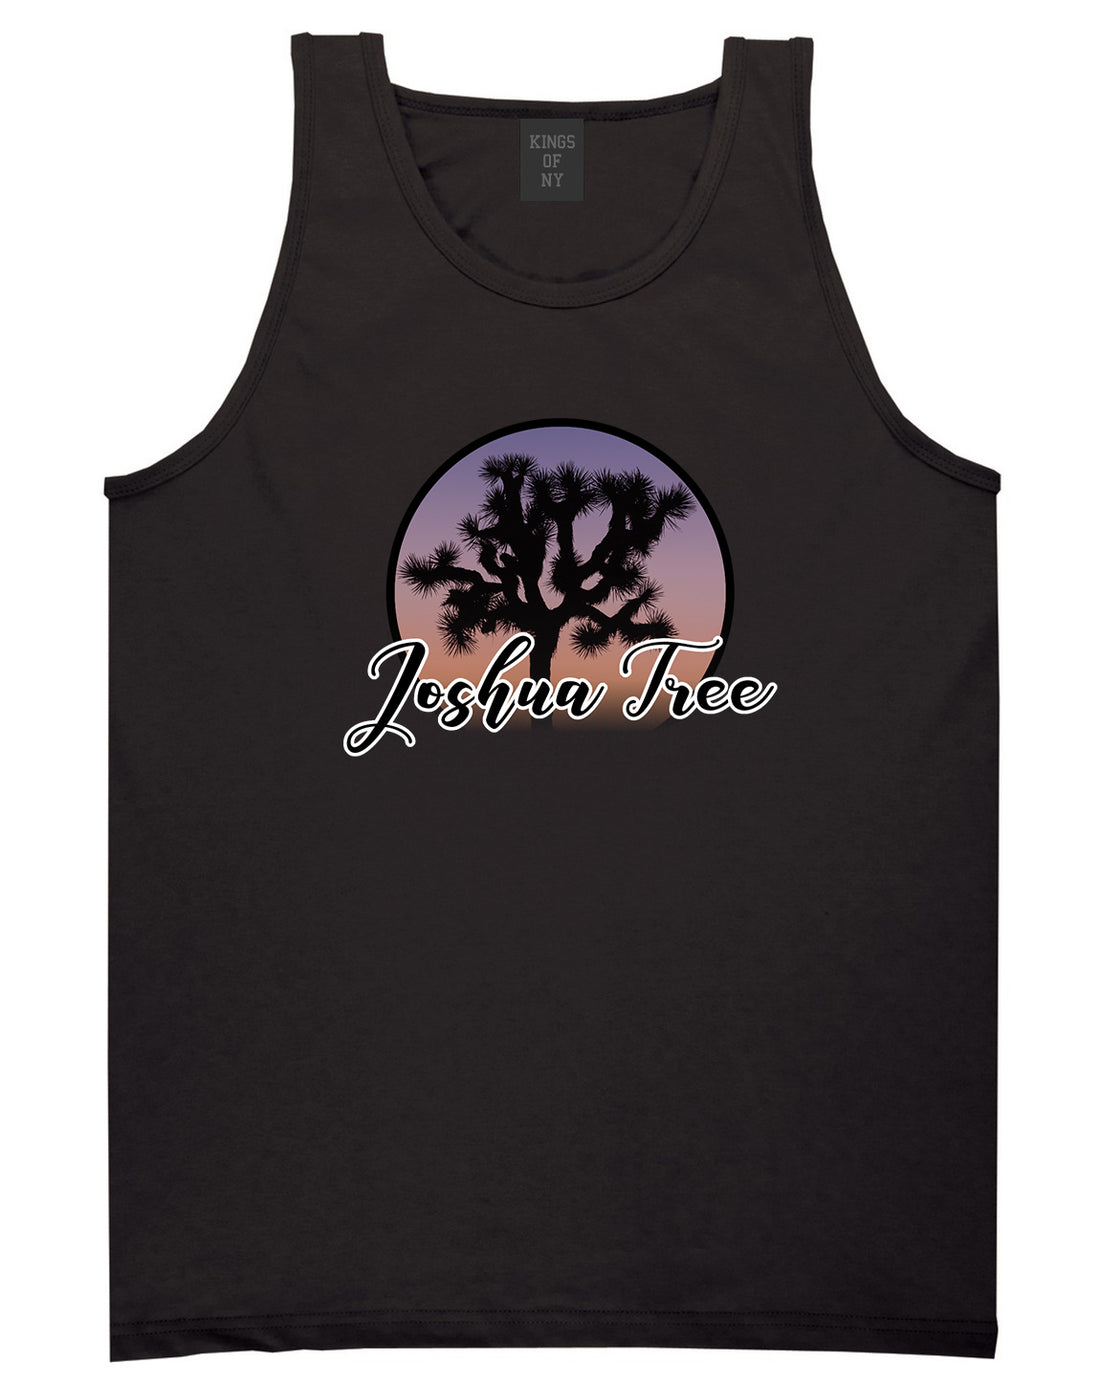 Joshua Tree Mens Tank Top Shirt Black